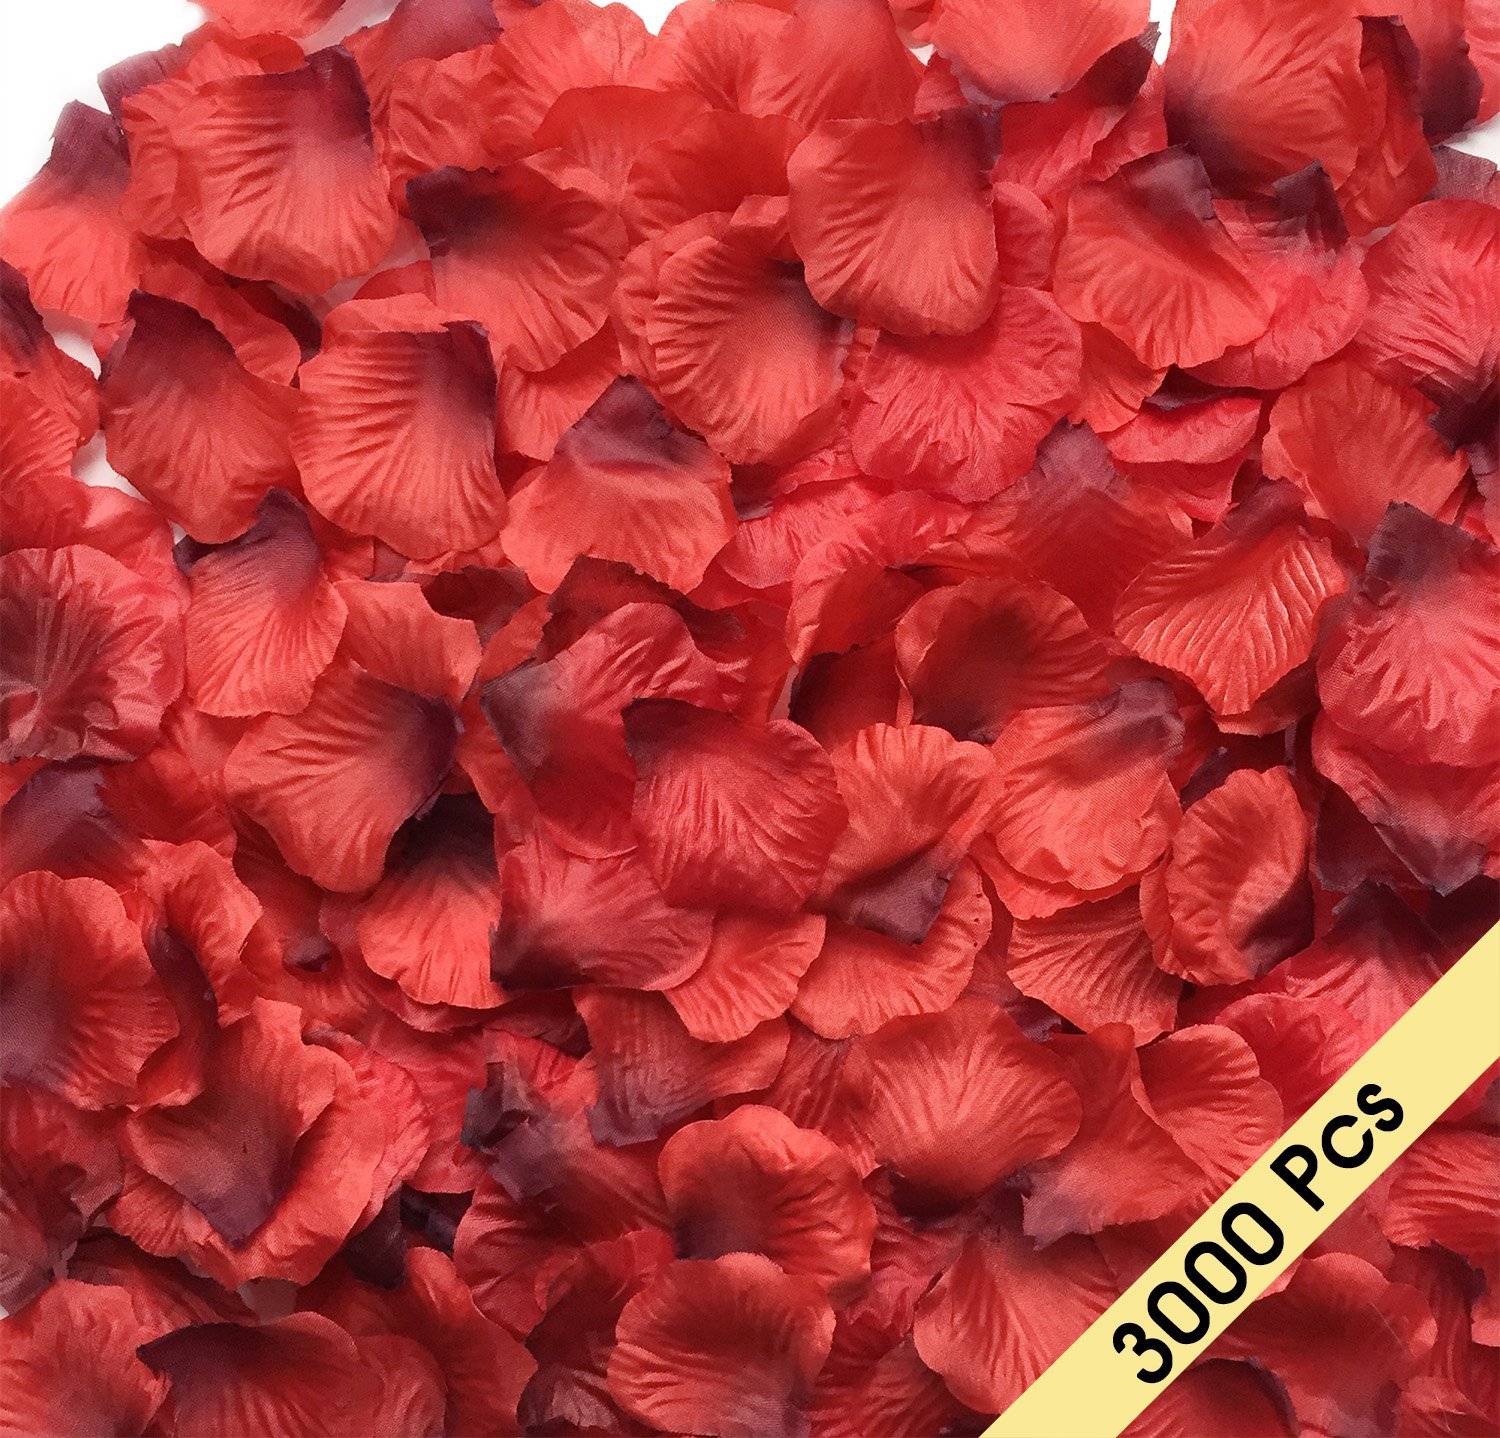 Amazon.com: NewCool 3000 Pcs Dark Red Silk Rose Petals Artificial ...